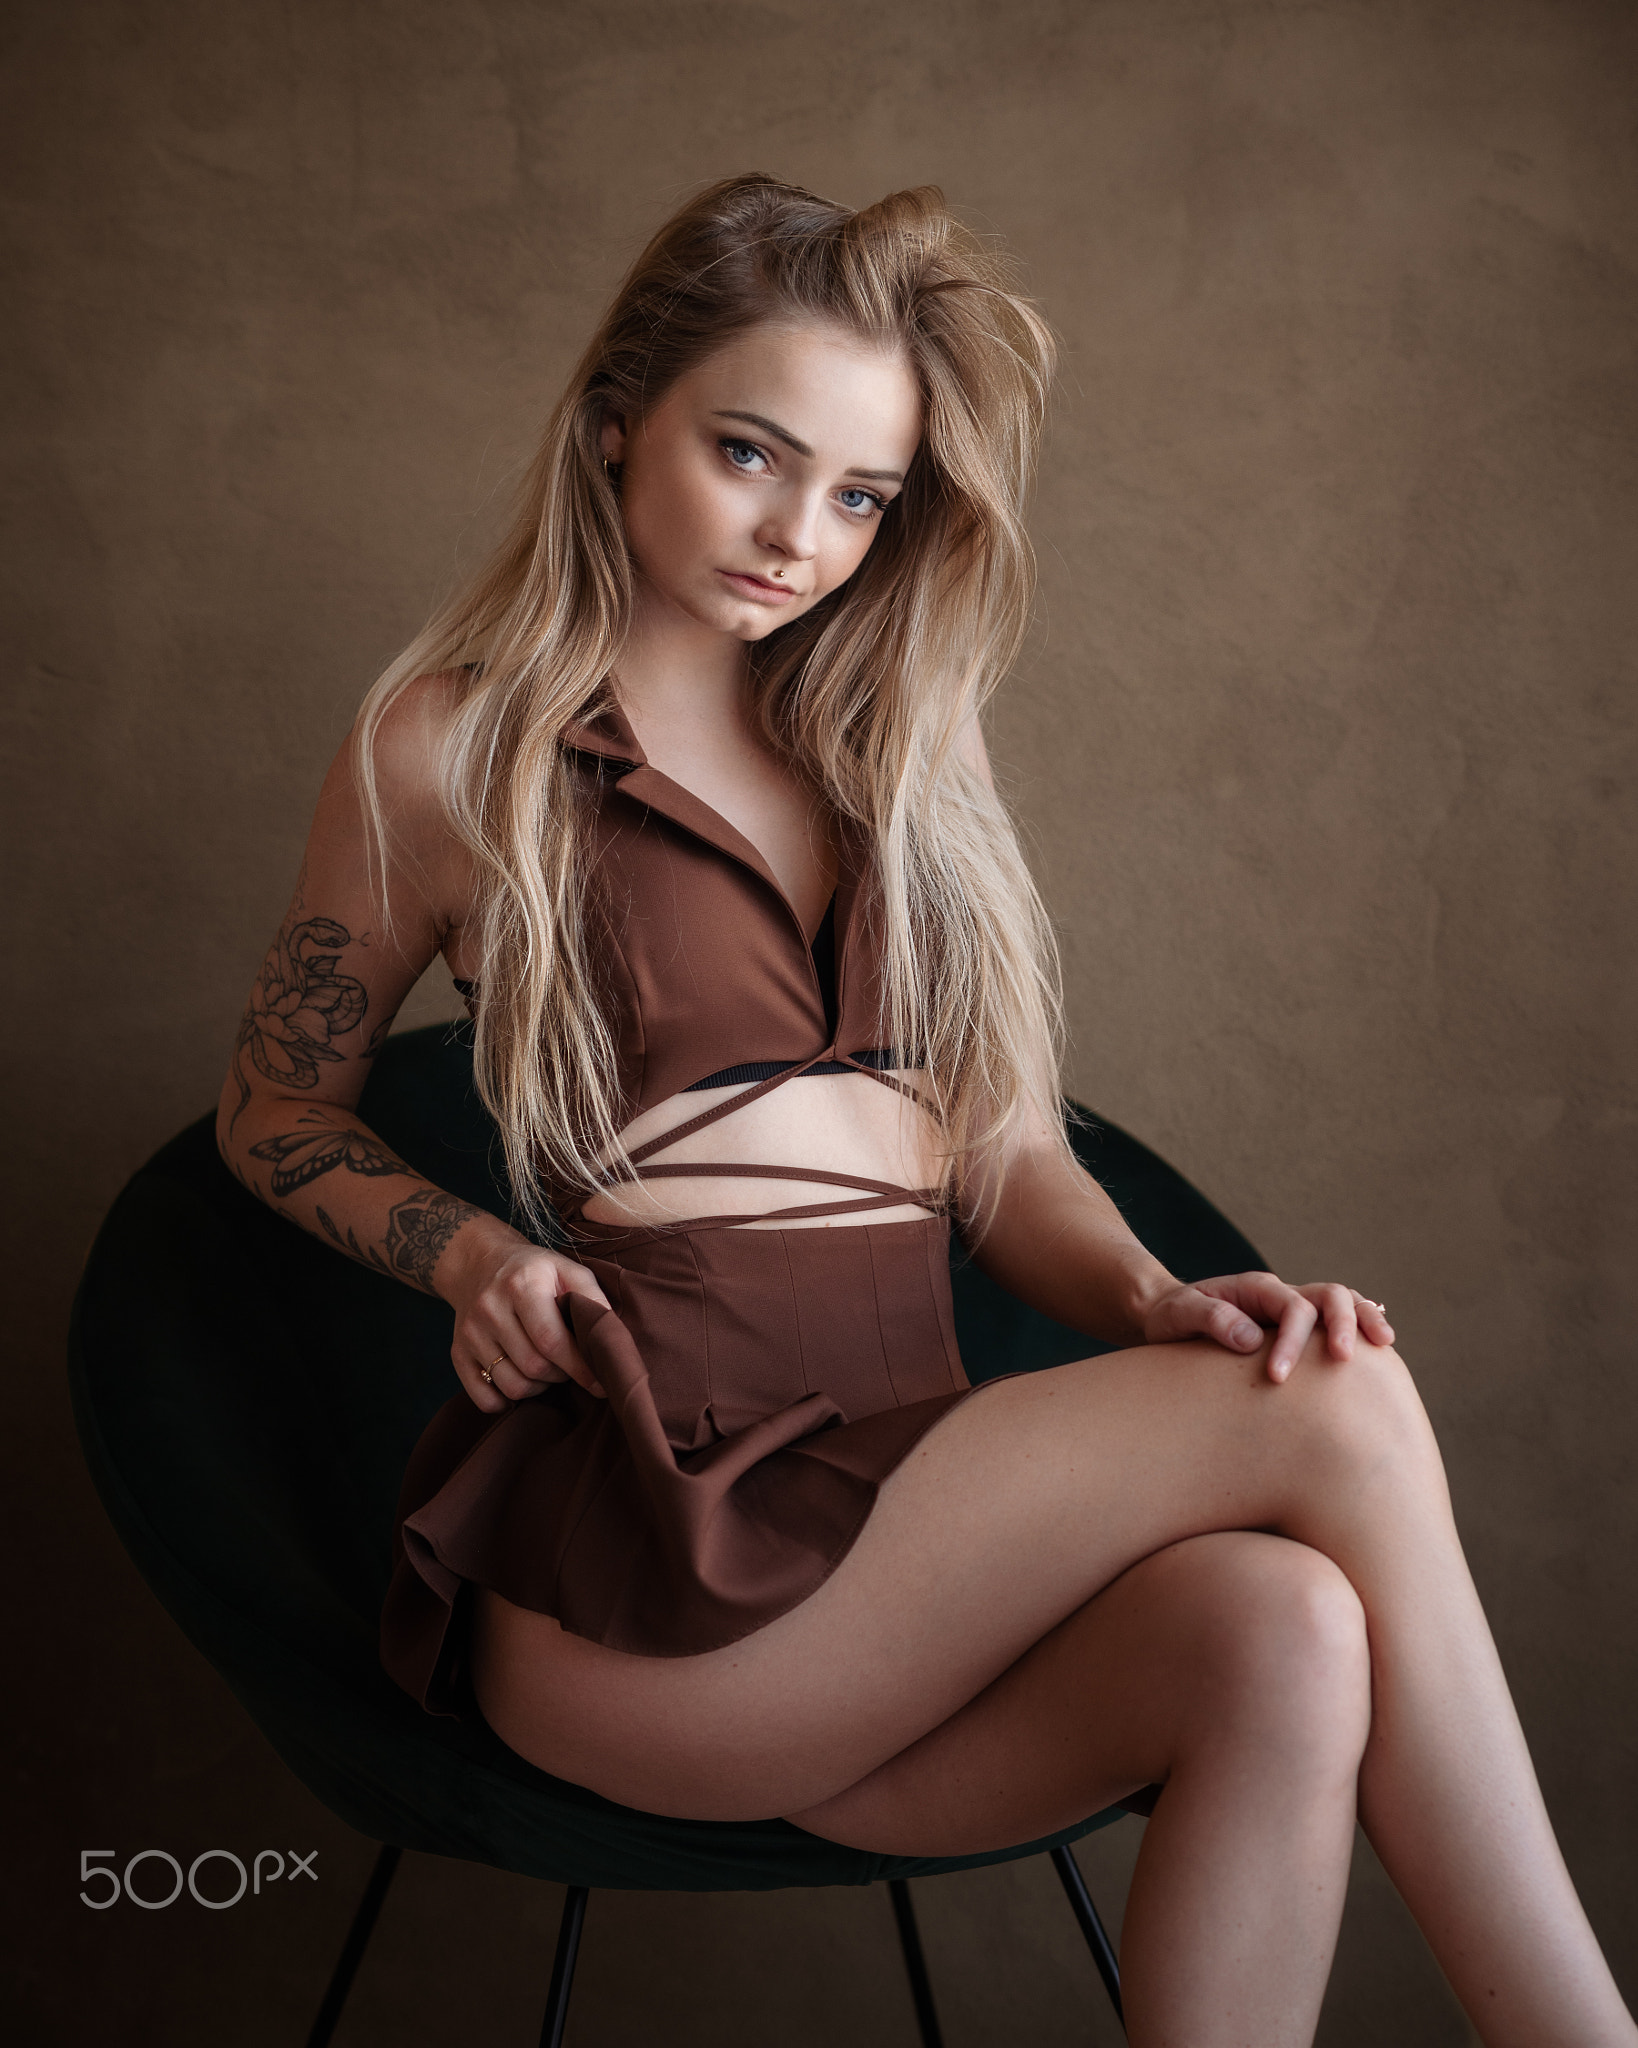 Michel Keppens Women Blonde Long Hair Legs Crossed Dress Brown Clothing Tattoo Chair 1638x2048